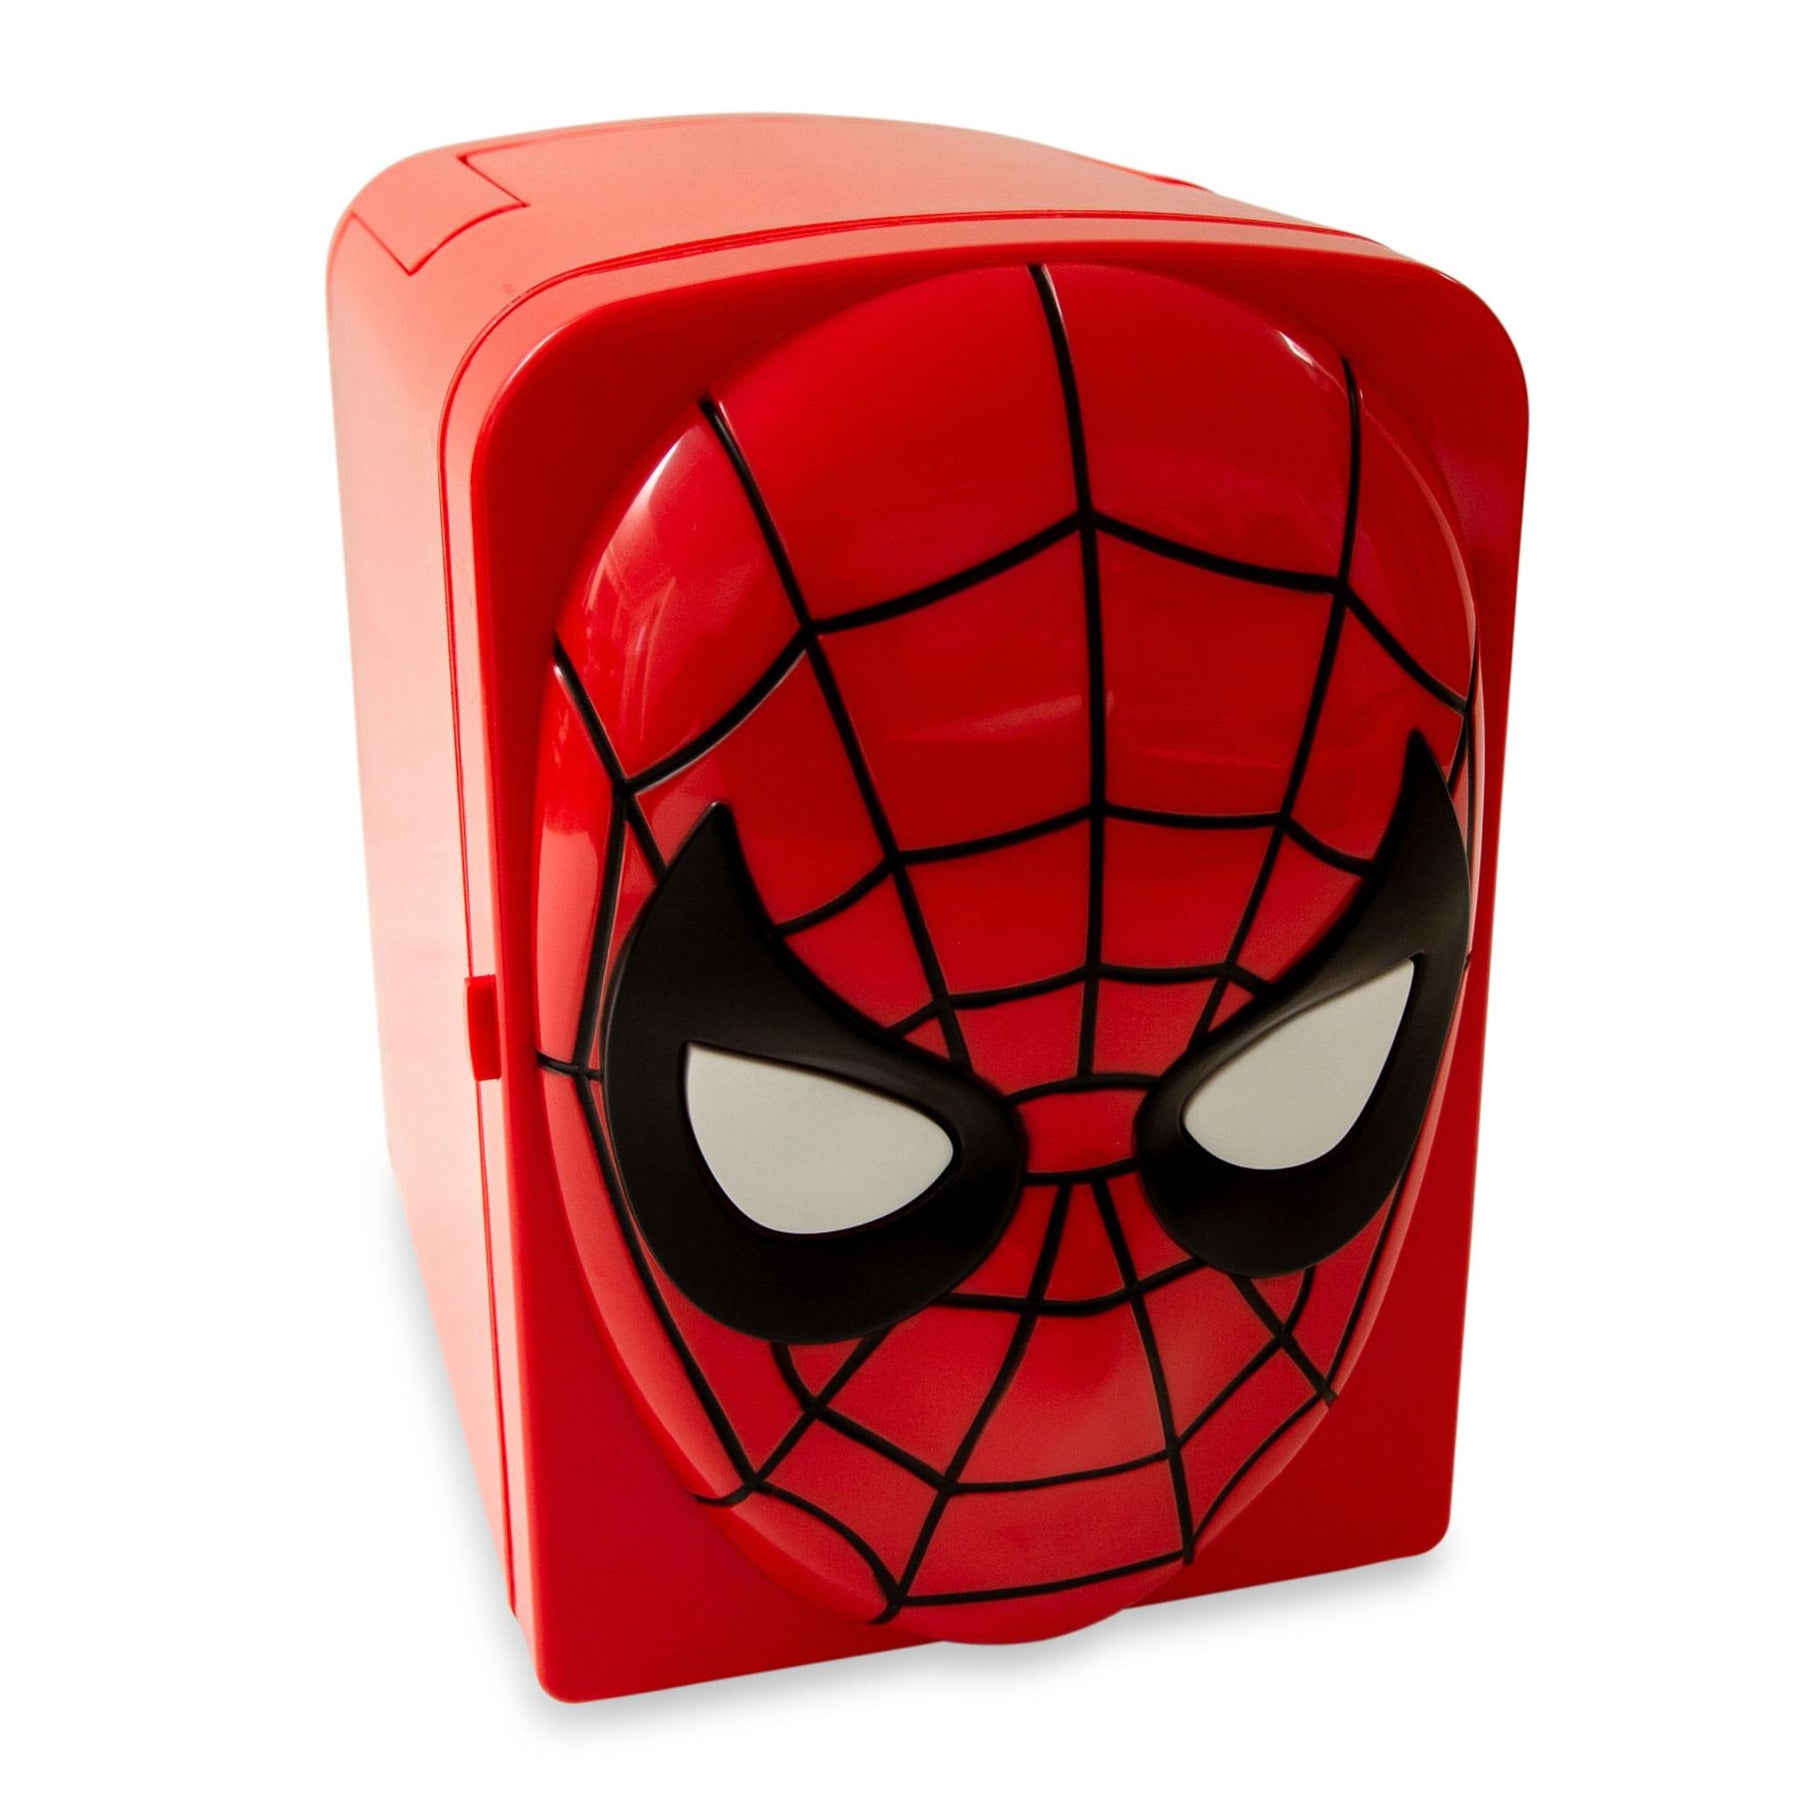 Marvel Spider-Man 4 Liter Thermoelectric Cooler